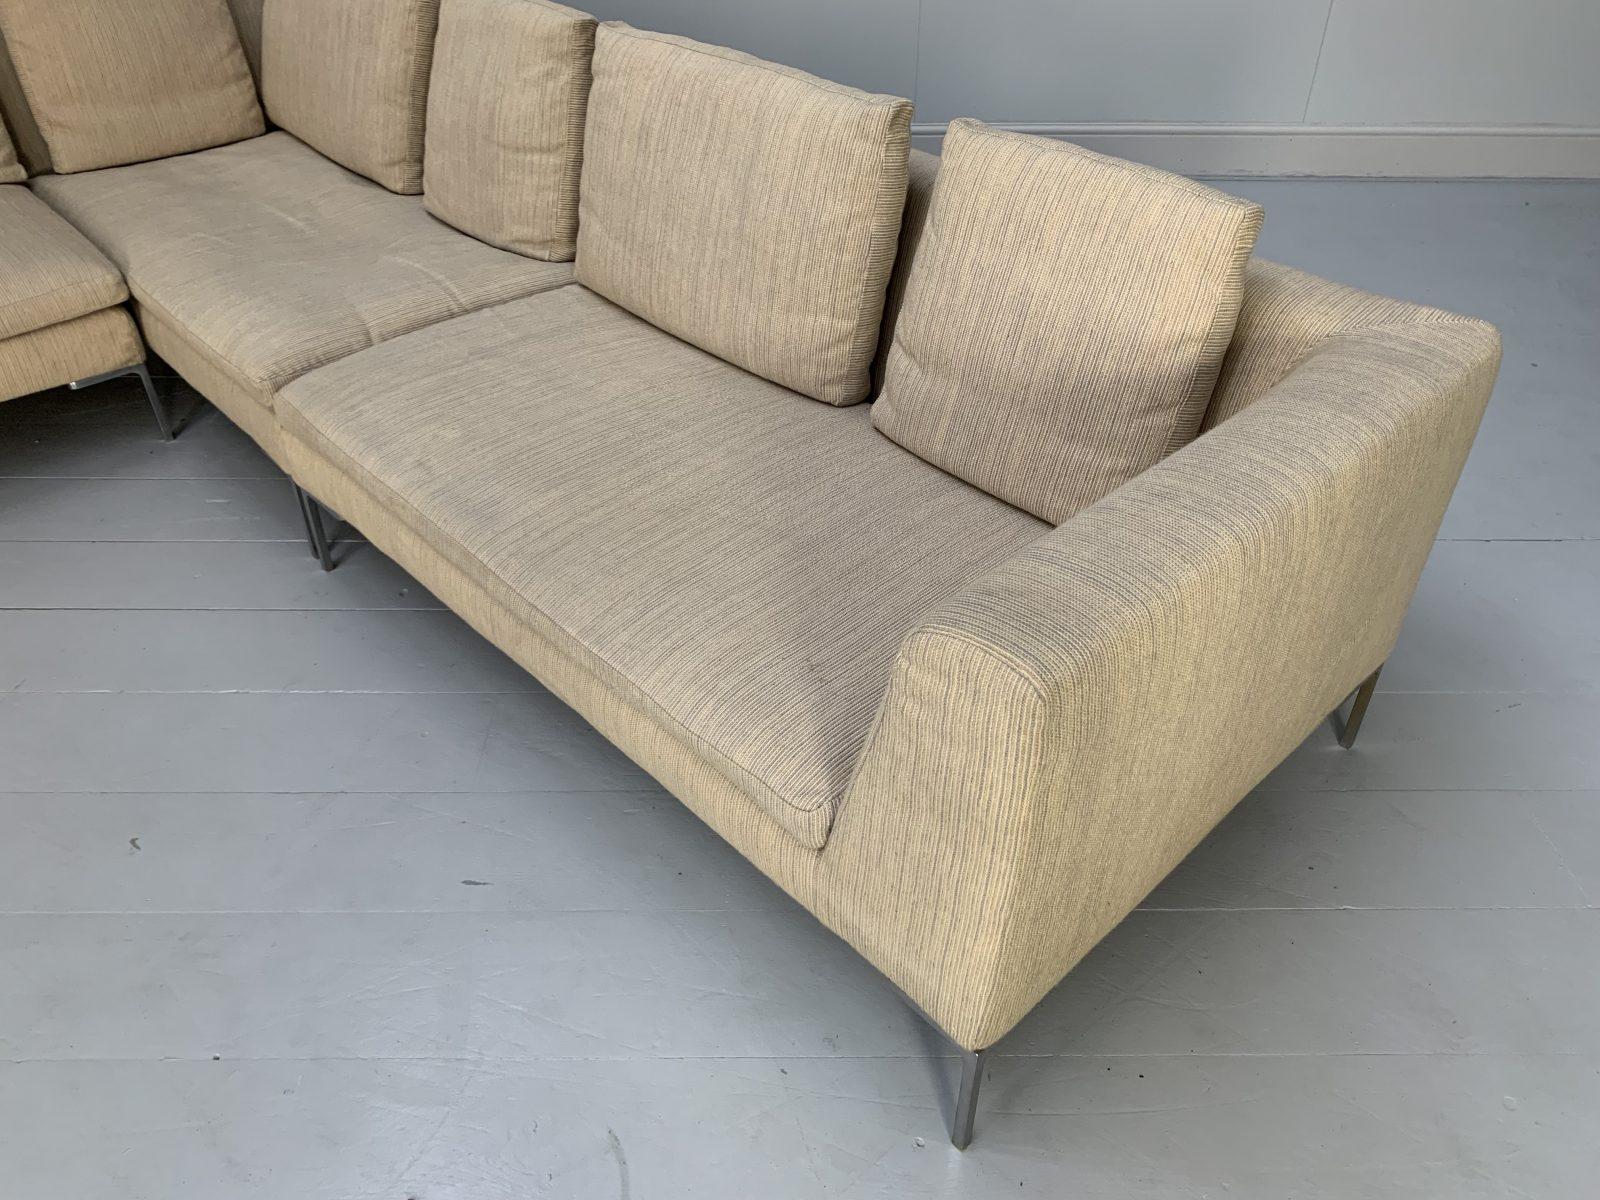 B&B Italia “Charles” L-Shape Sectional Sofa in Stripe Wool For Sale 4